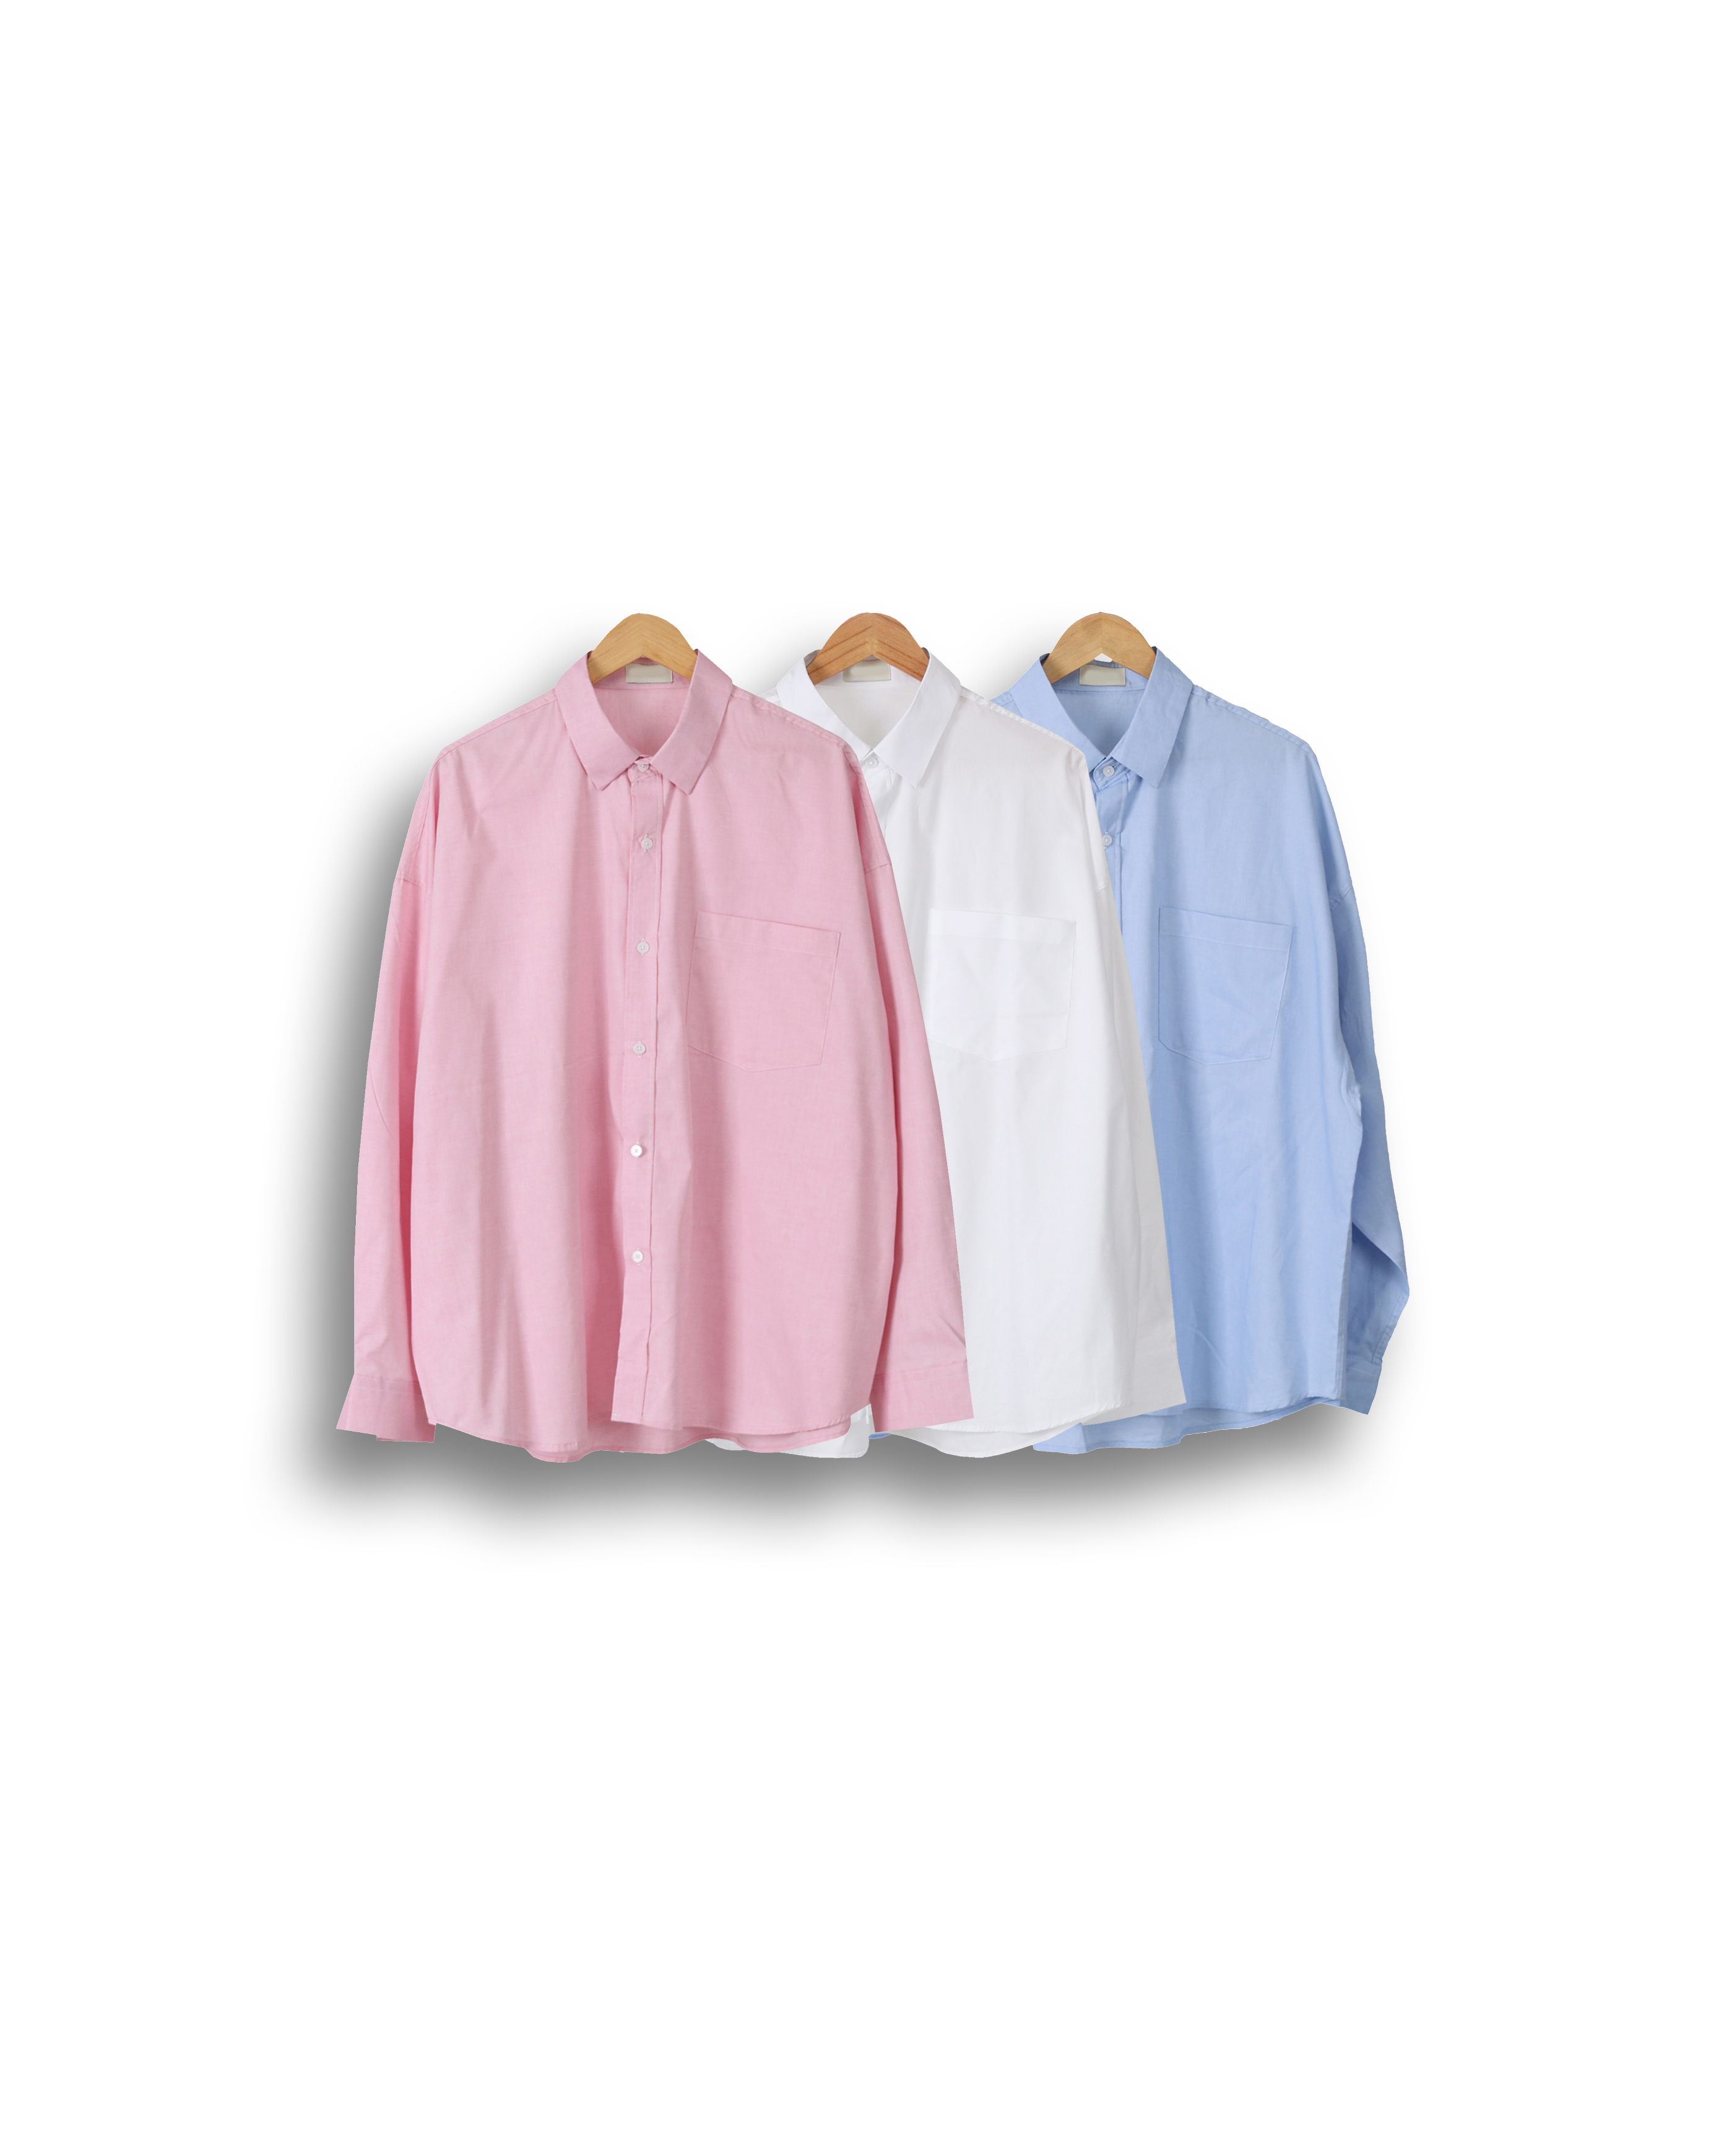 L’EPEK Oxford Cotton Oversized Shirts (Sky Blue/Pink/White)